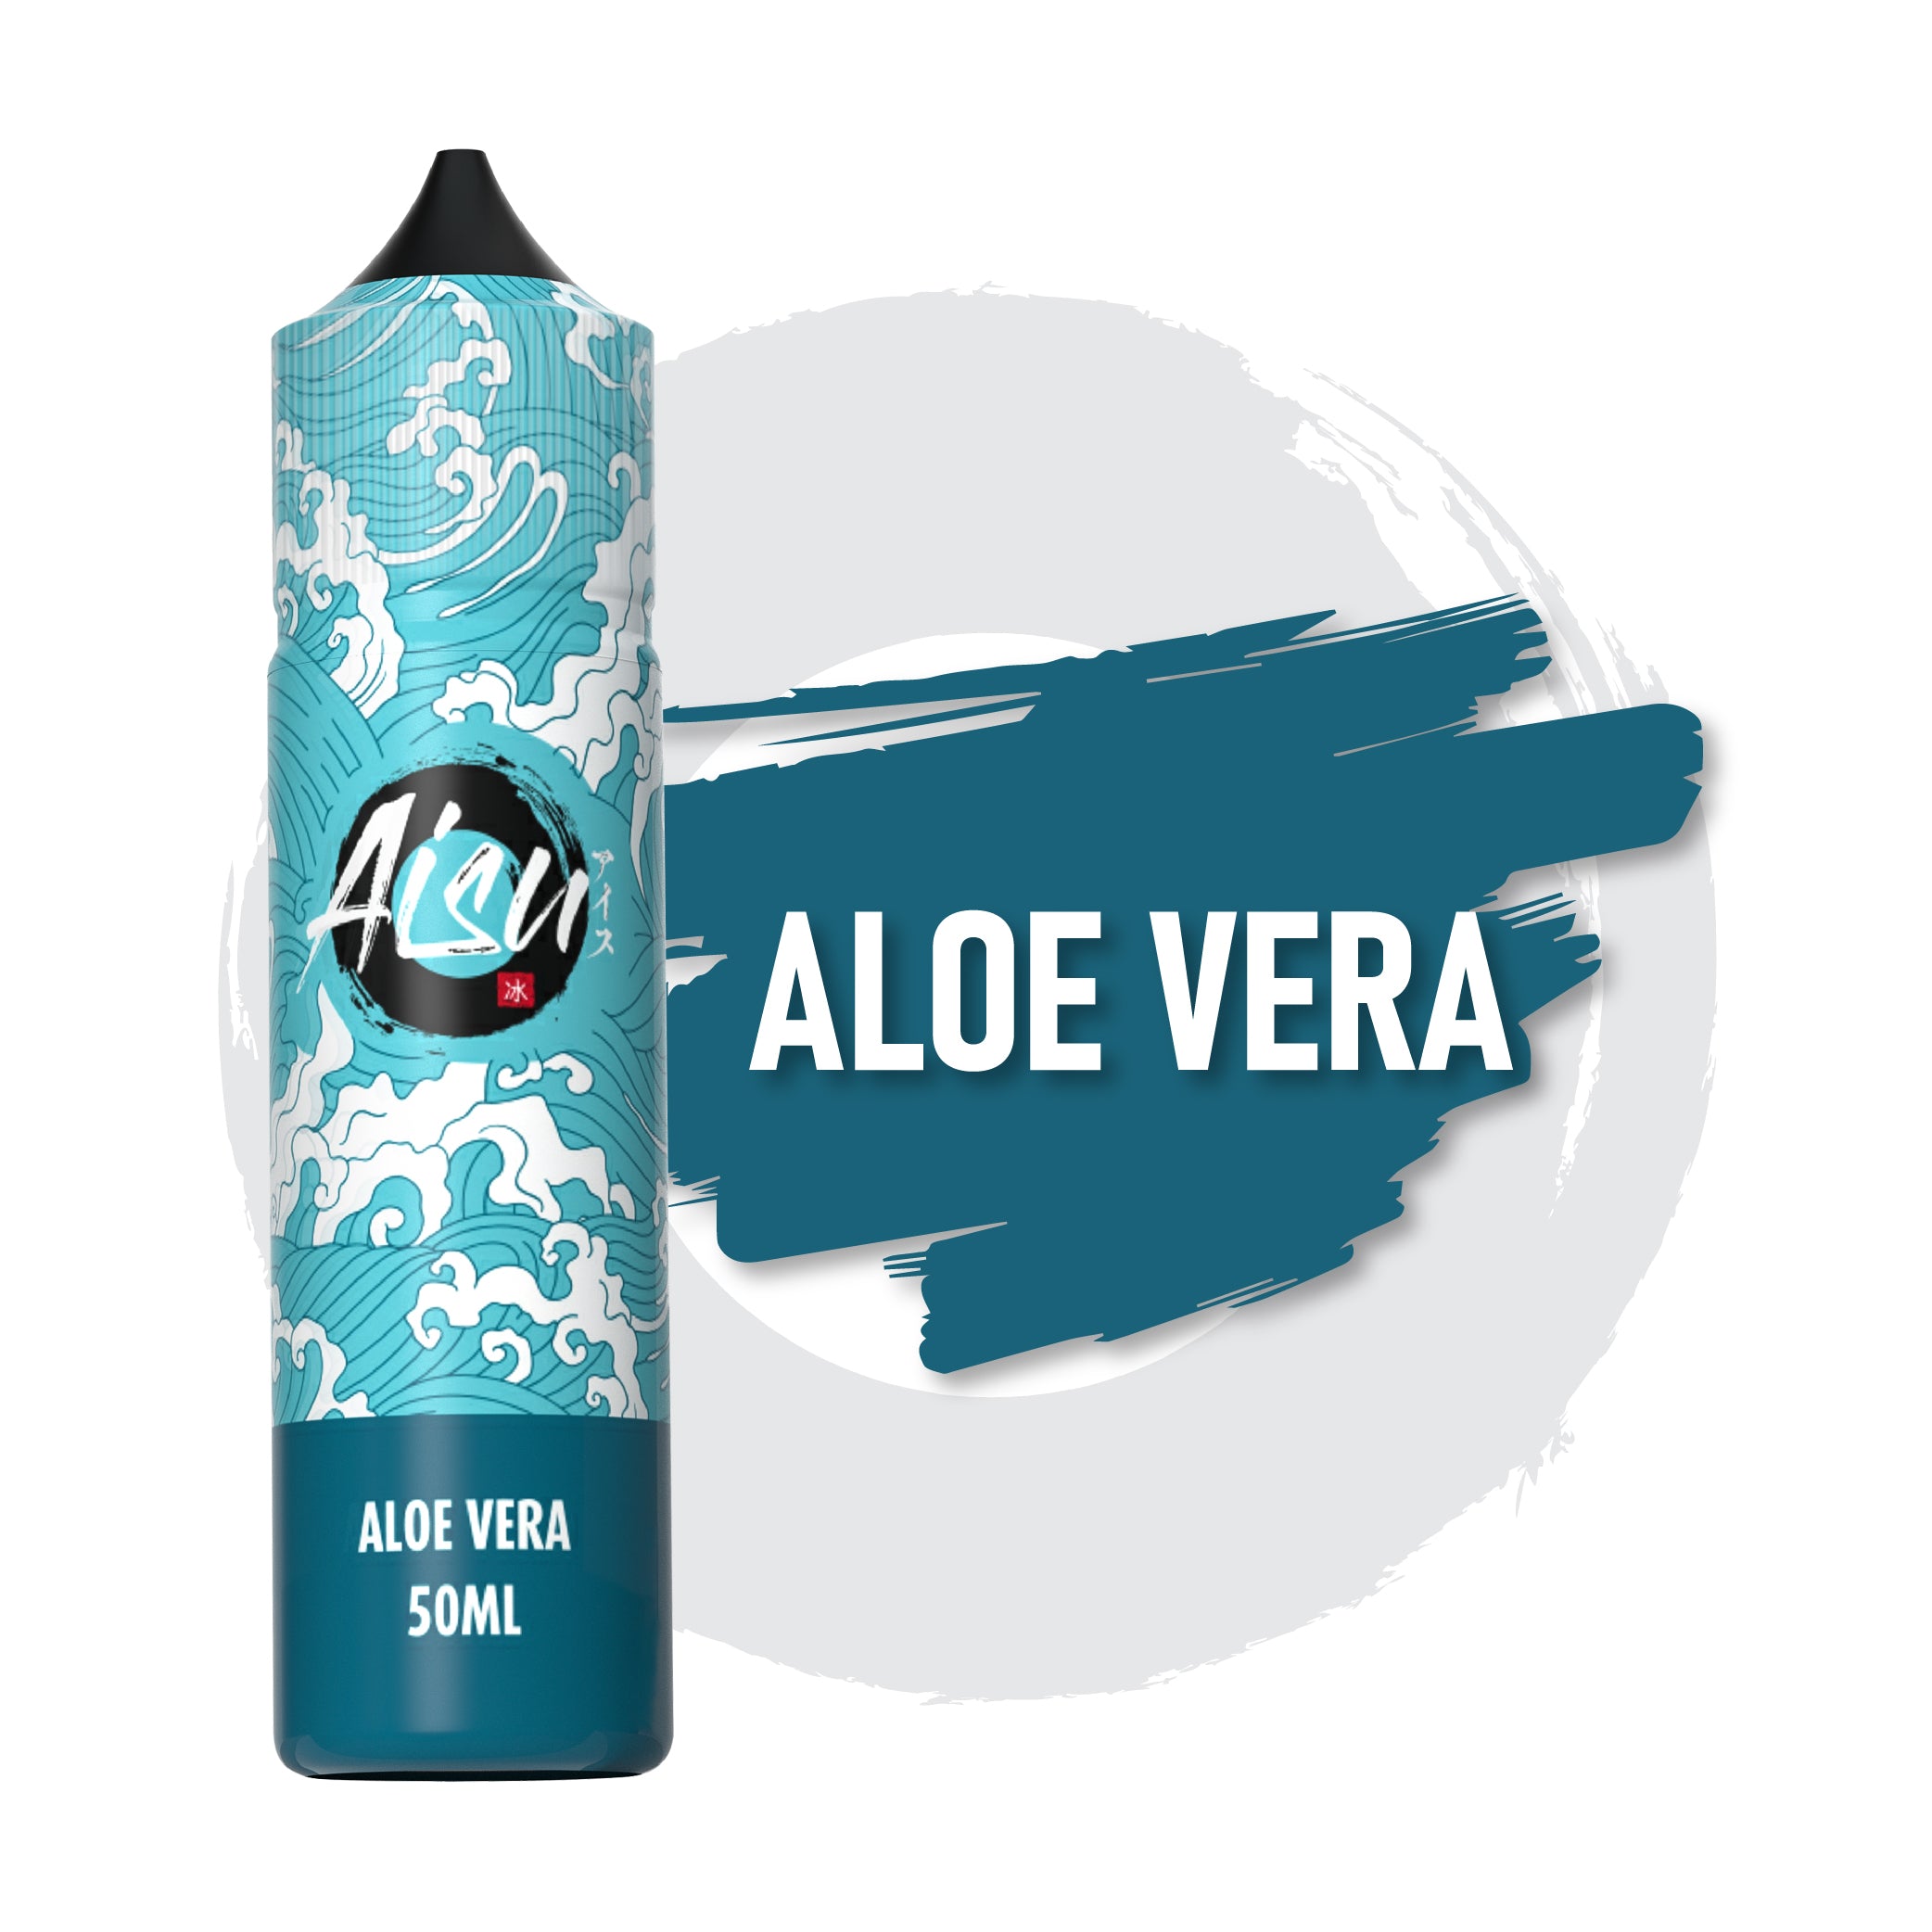 Aisu Aloe Vera E-liquid 50ml e-liquid bottle